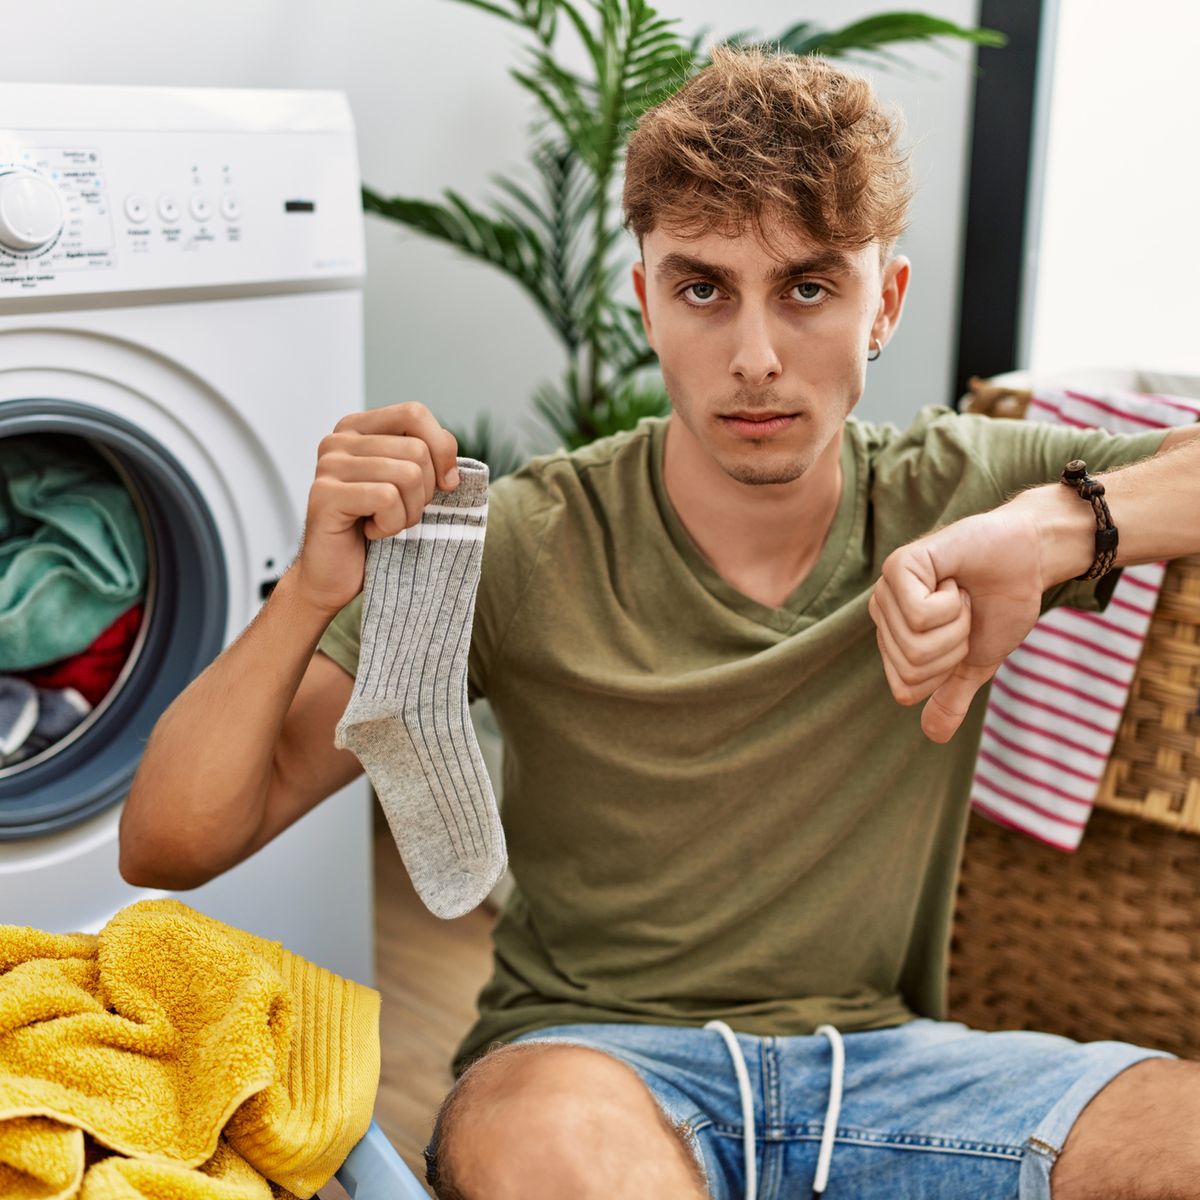 Es mejor secar la ropa al sol o en secadora?